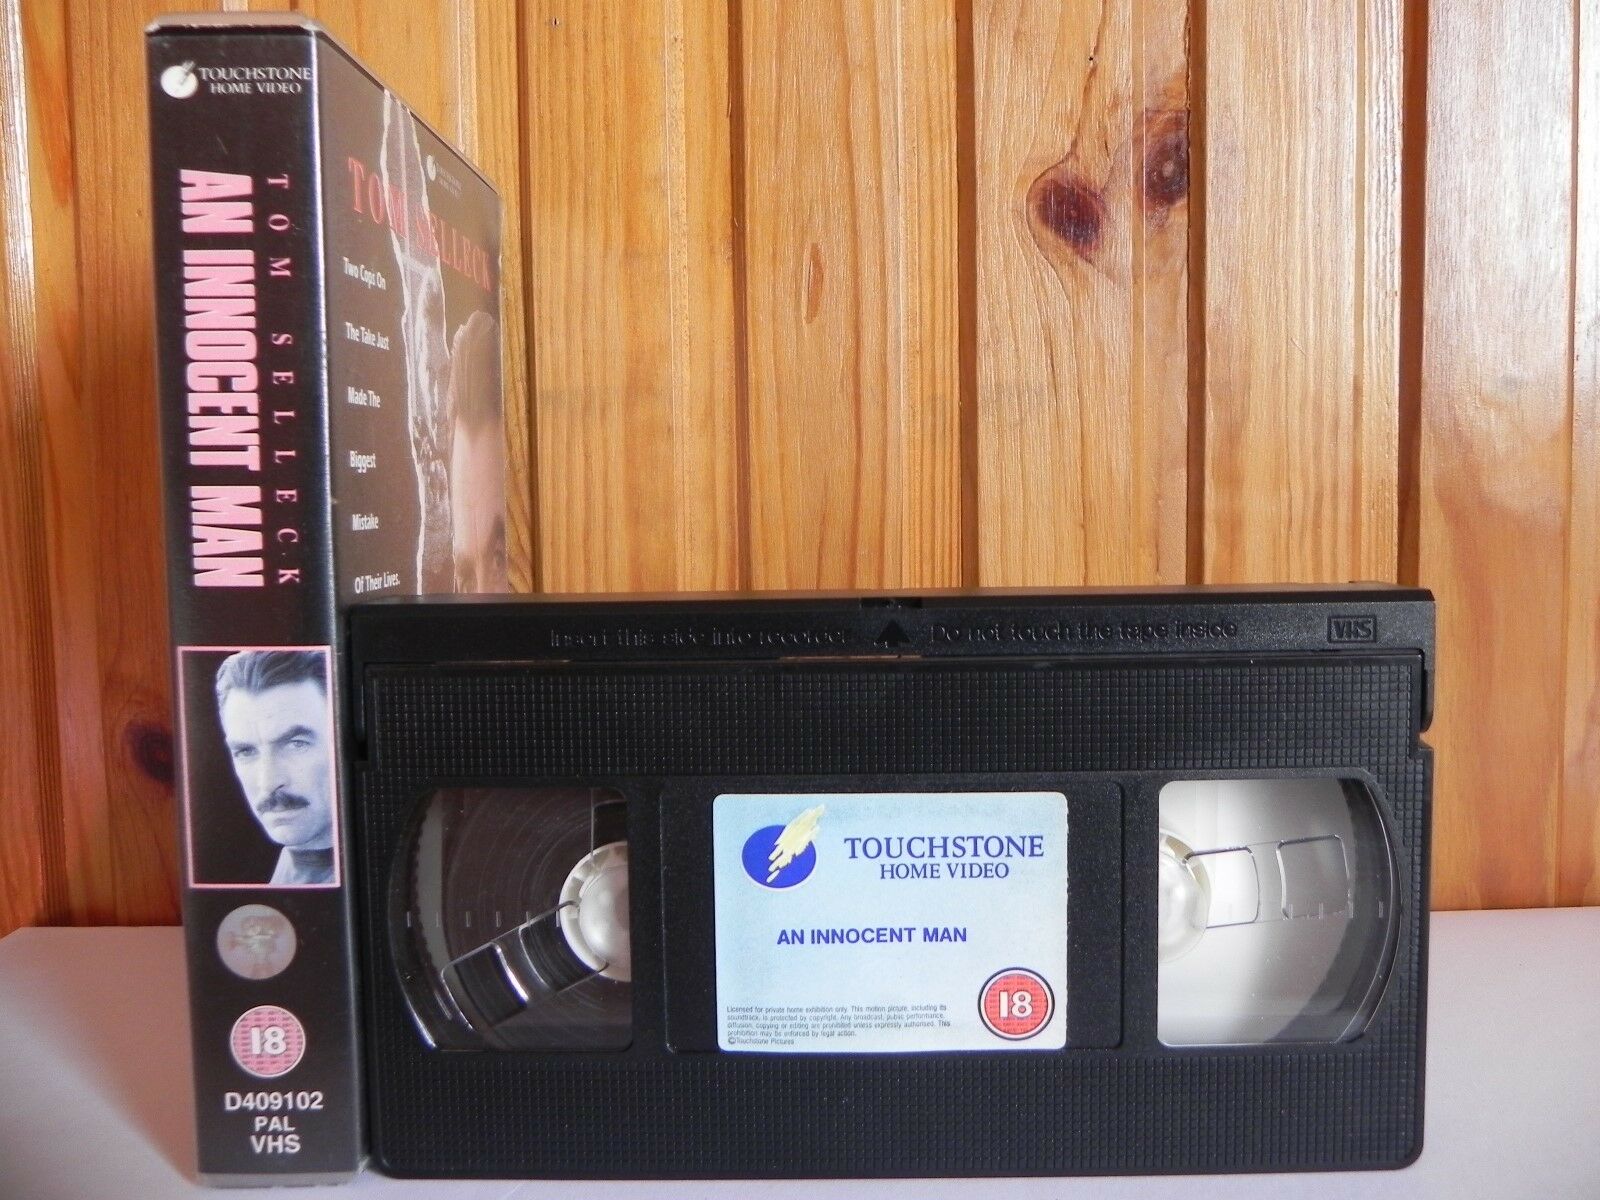 An Innocent Man - Touchstone - Action - Thriller - Tom Selleck - Pal VHS-